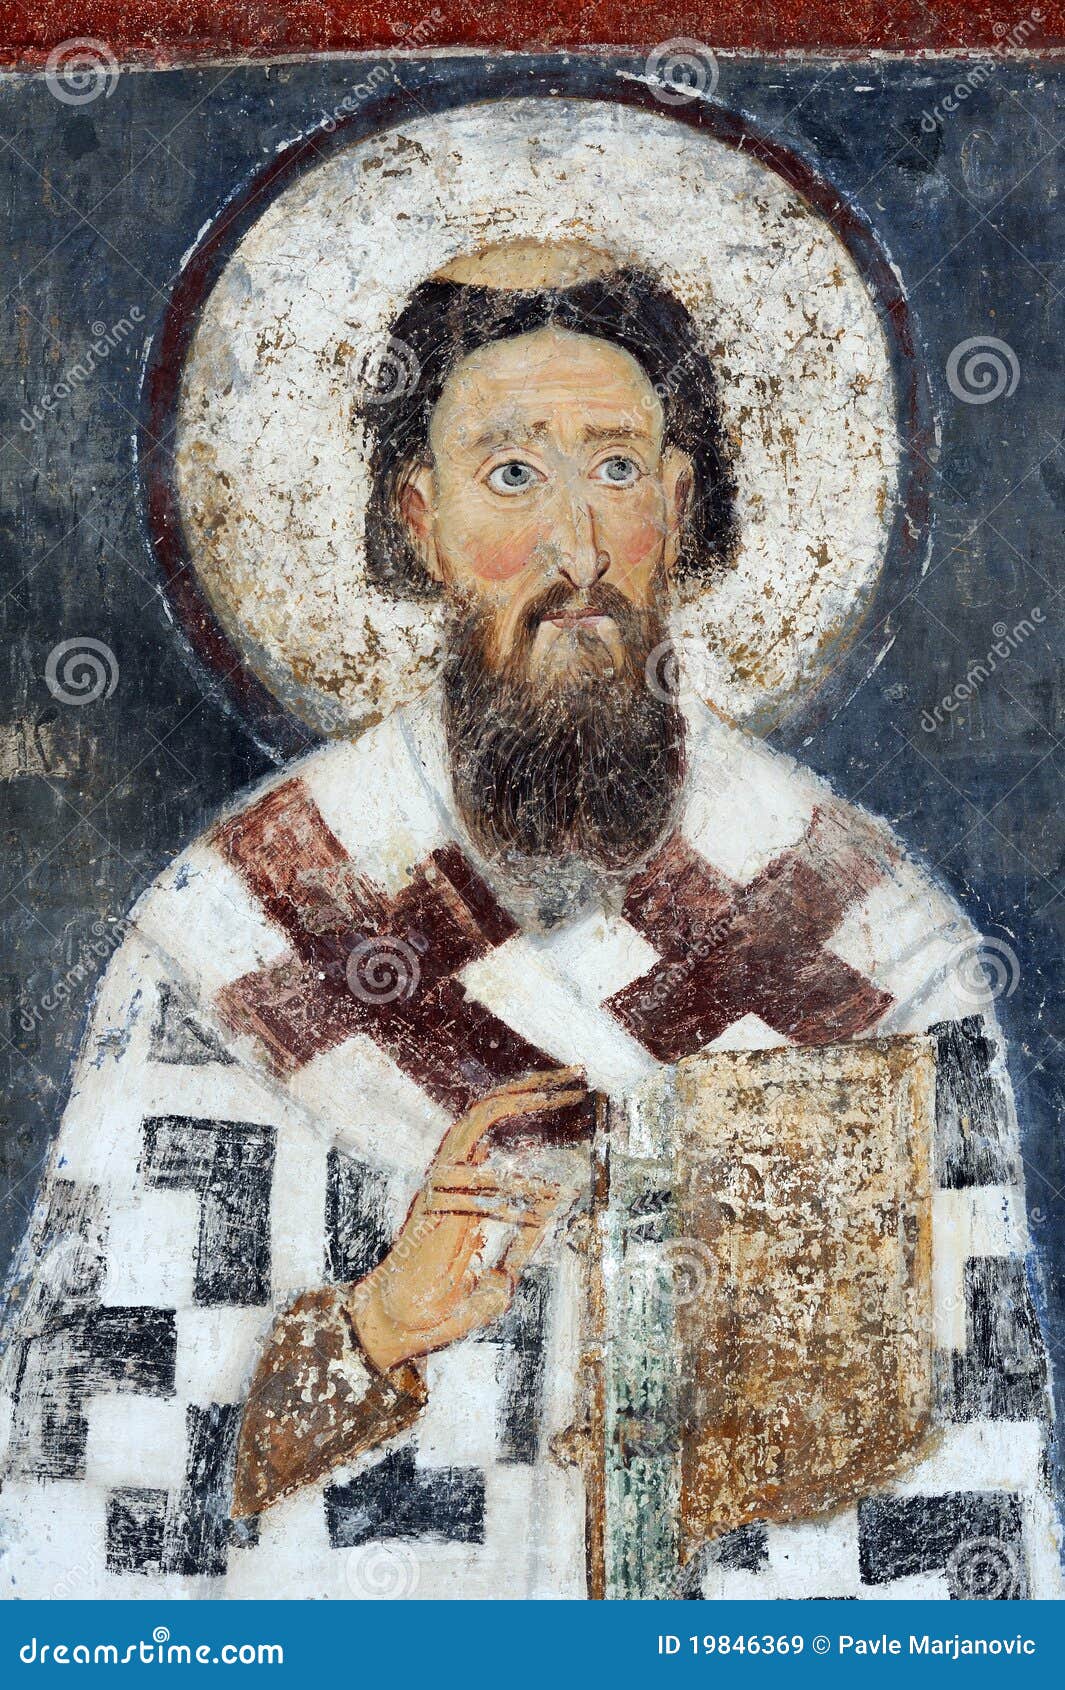 saint sava, fresco from monastery mileseva